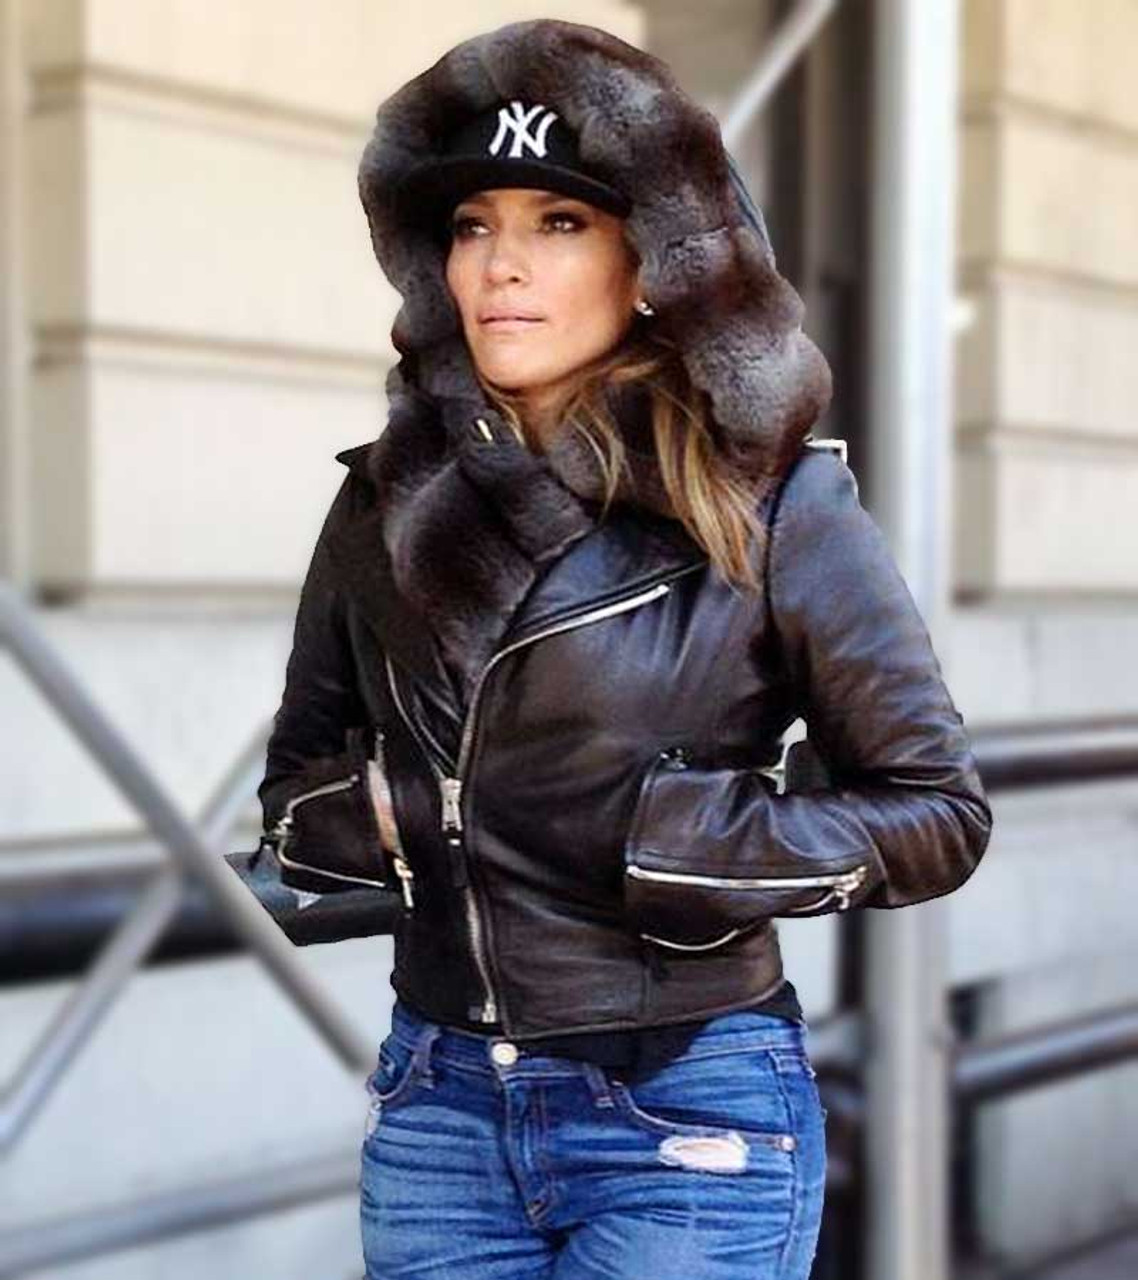 Womens Casual Designer Slim Fit Black Leather Bomber Jacket